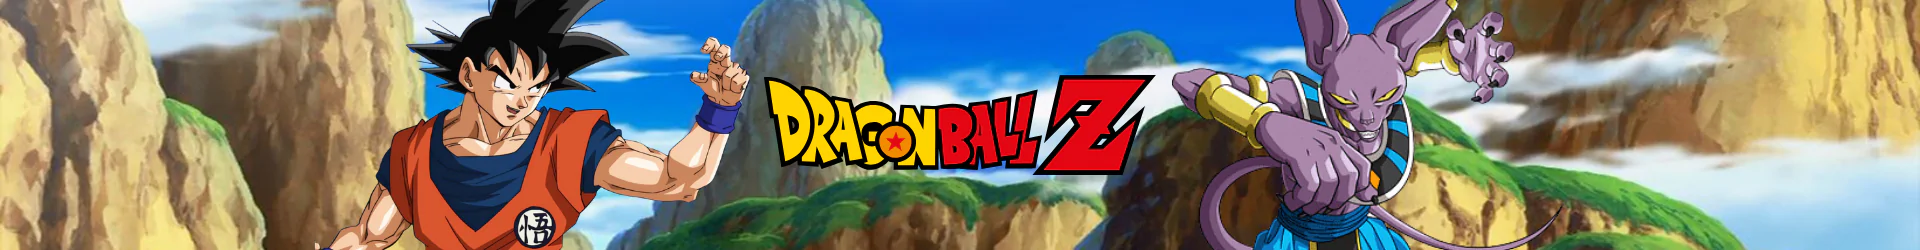 Dragon Ball aufkleber banner